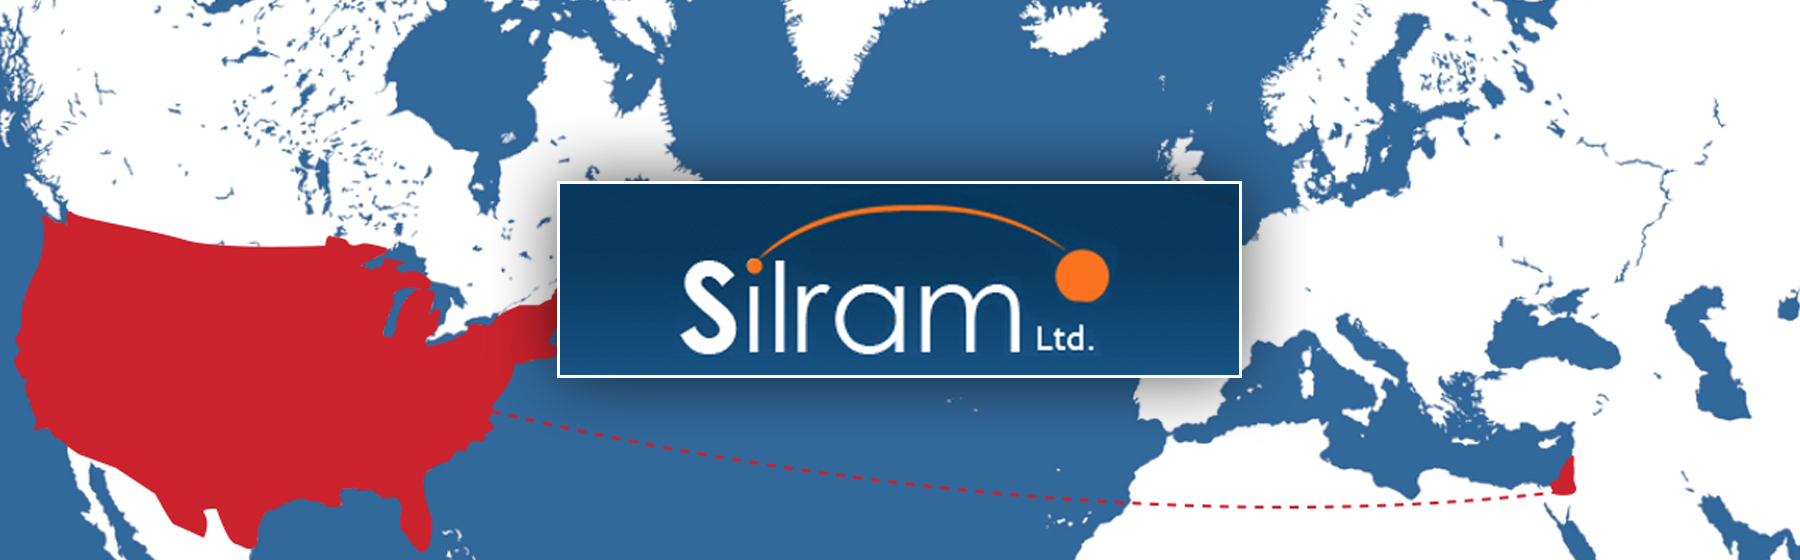 Silram Group Ltd.